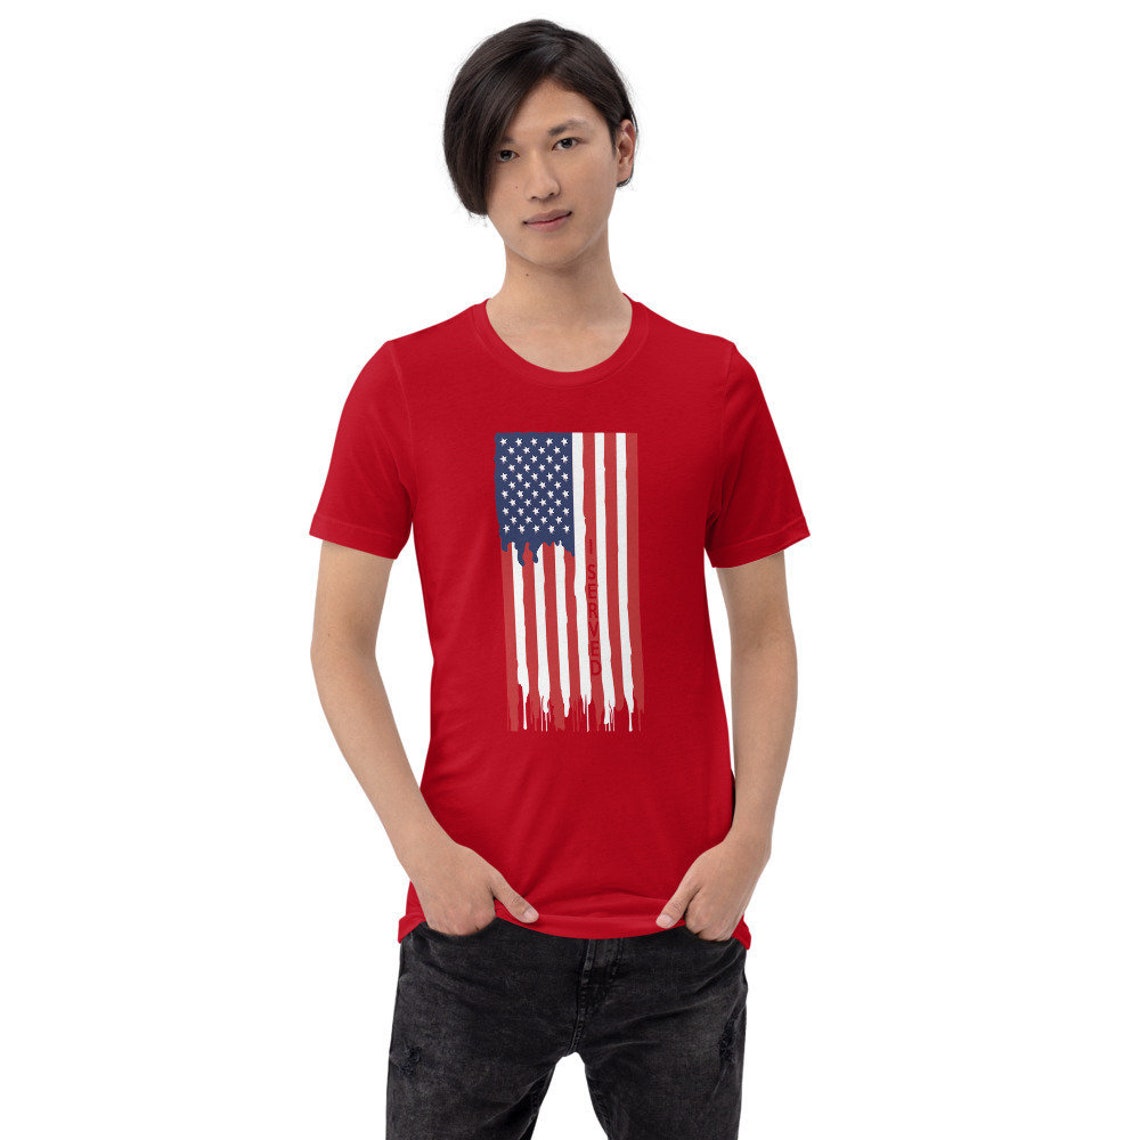 I Served Shirt American Flag Shirt Patriotic Shirt Military | Etsy